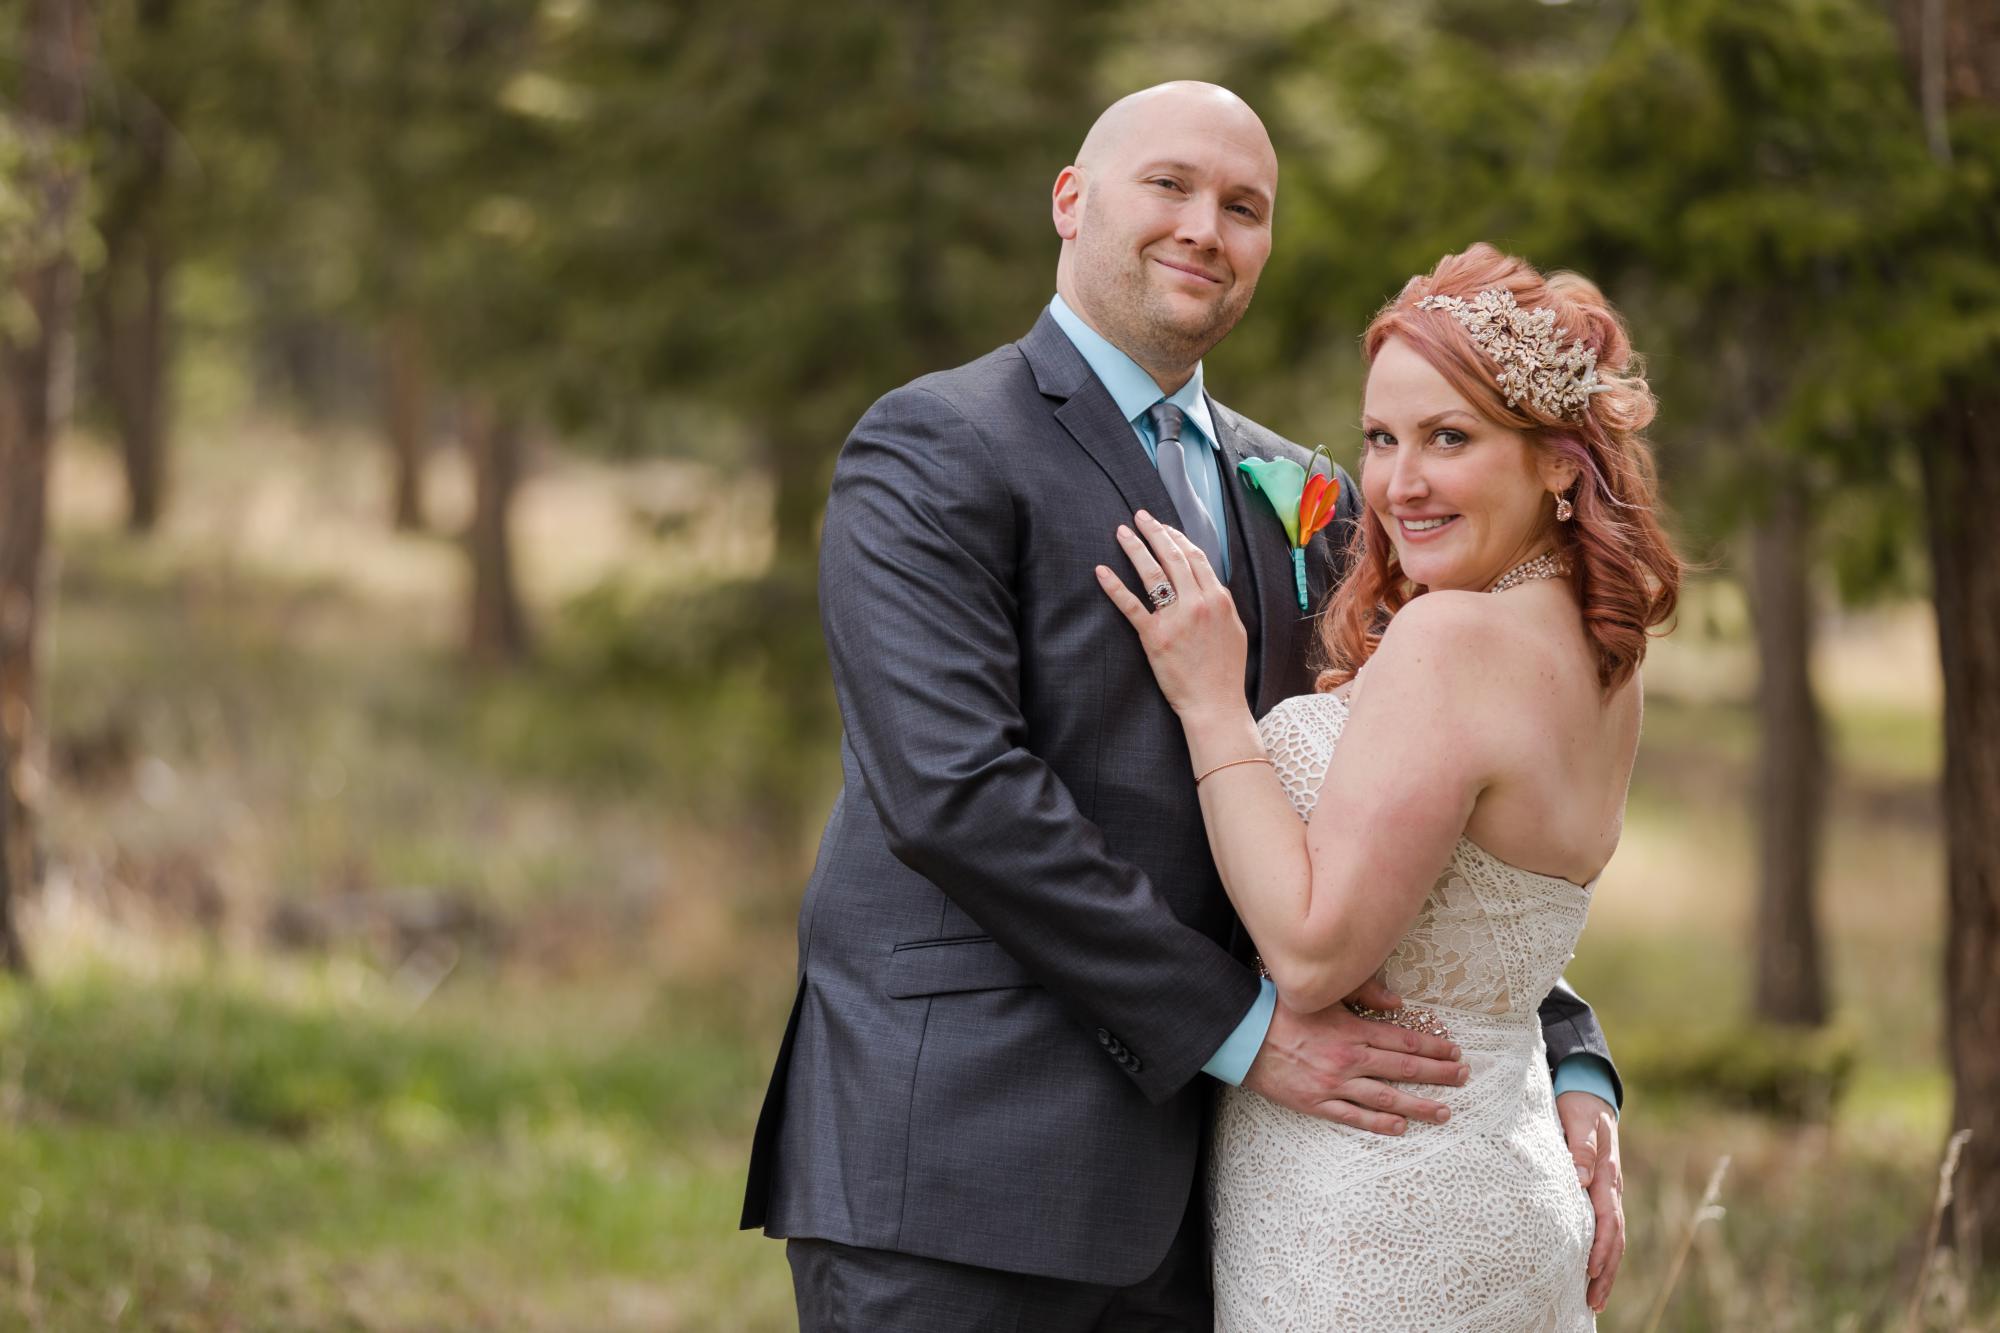 newlywed portraits with wedding photography editing